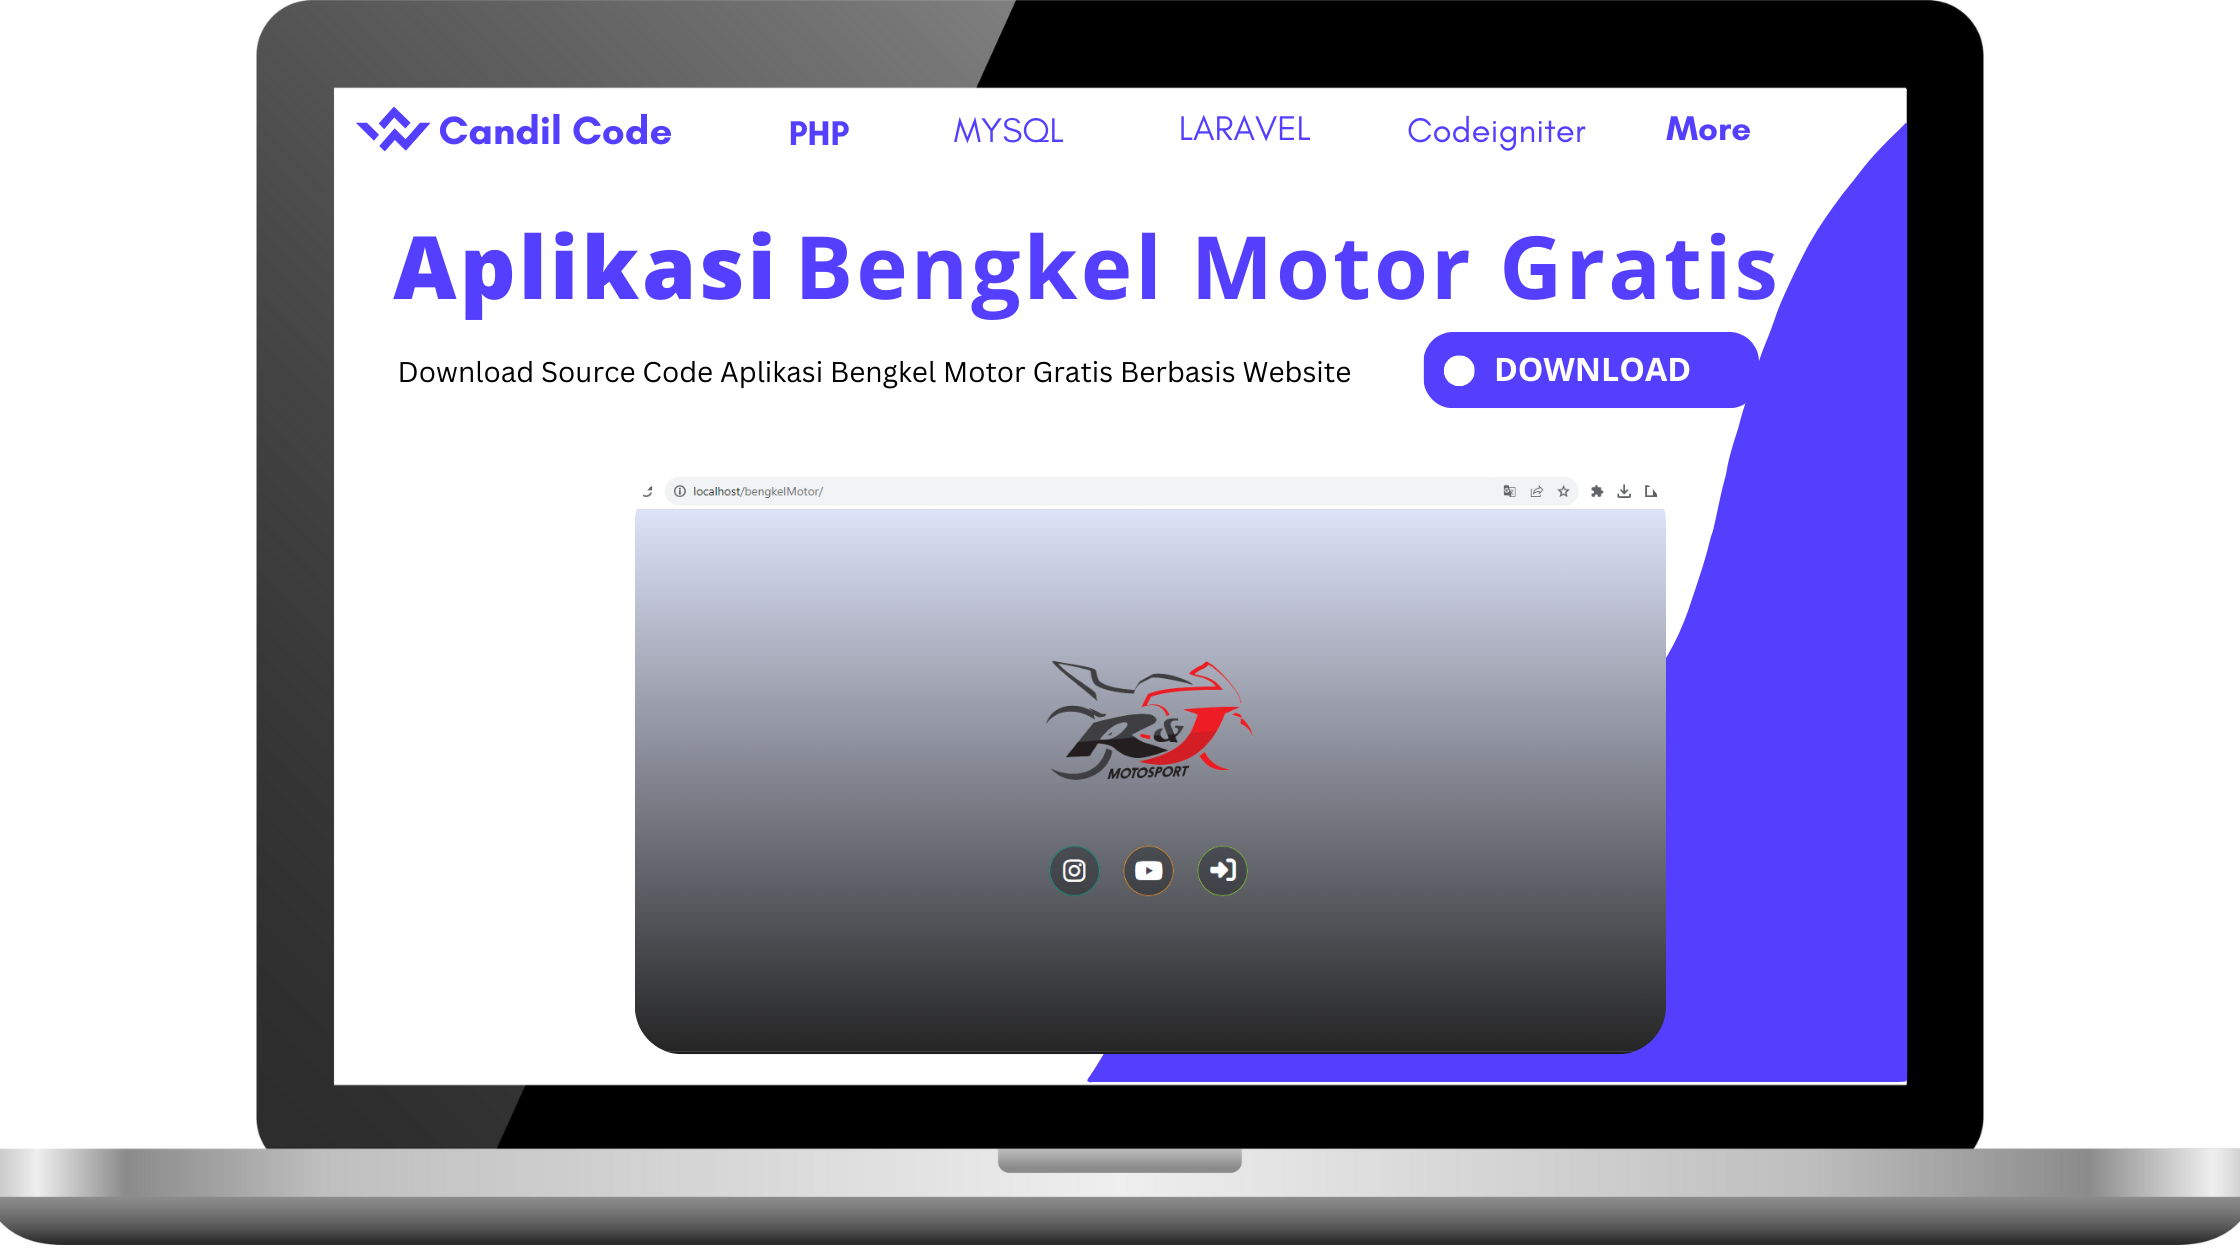 Aplikasi Bengkel Motor Berbasis Website